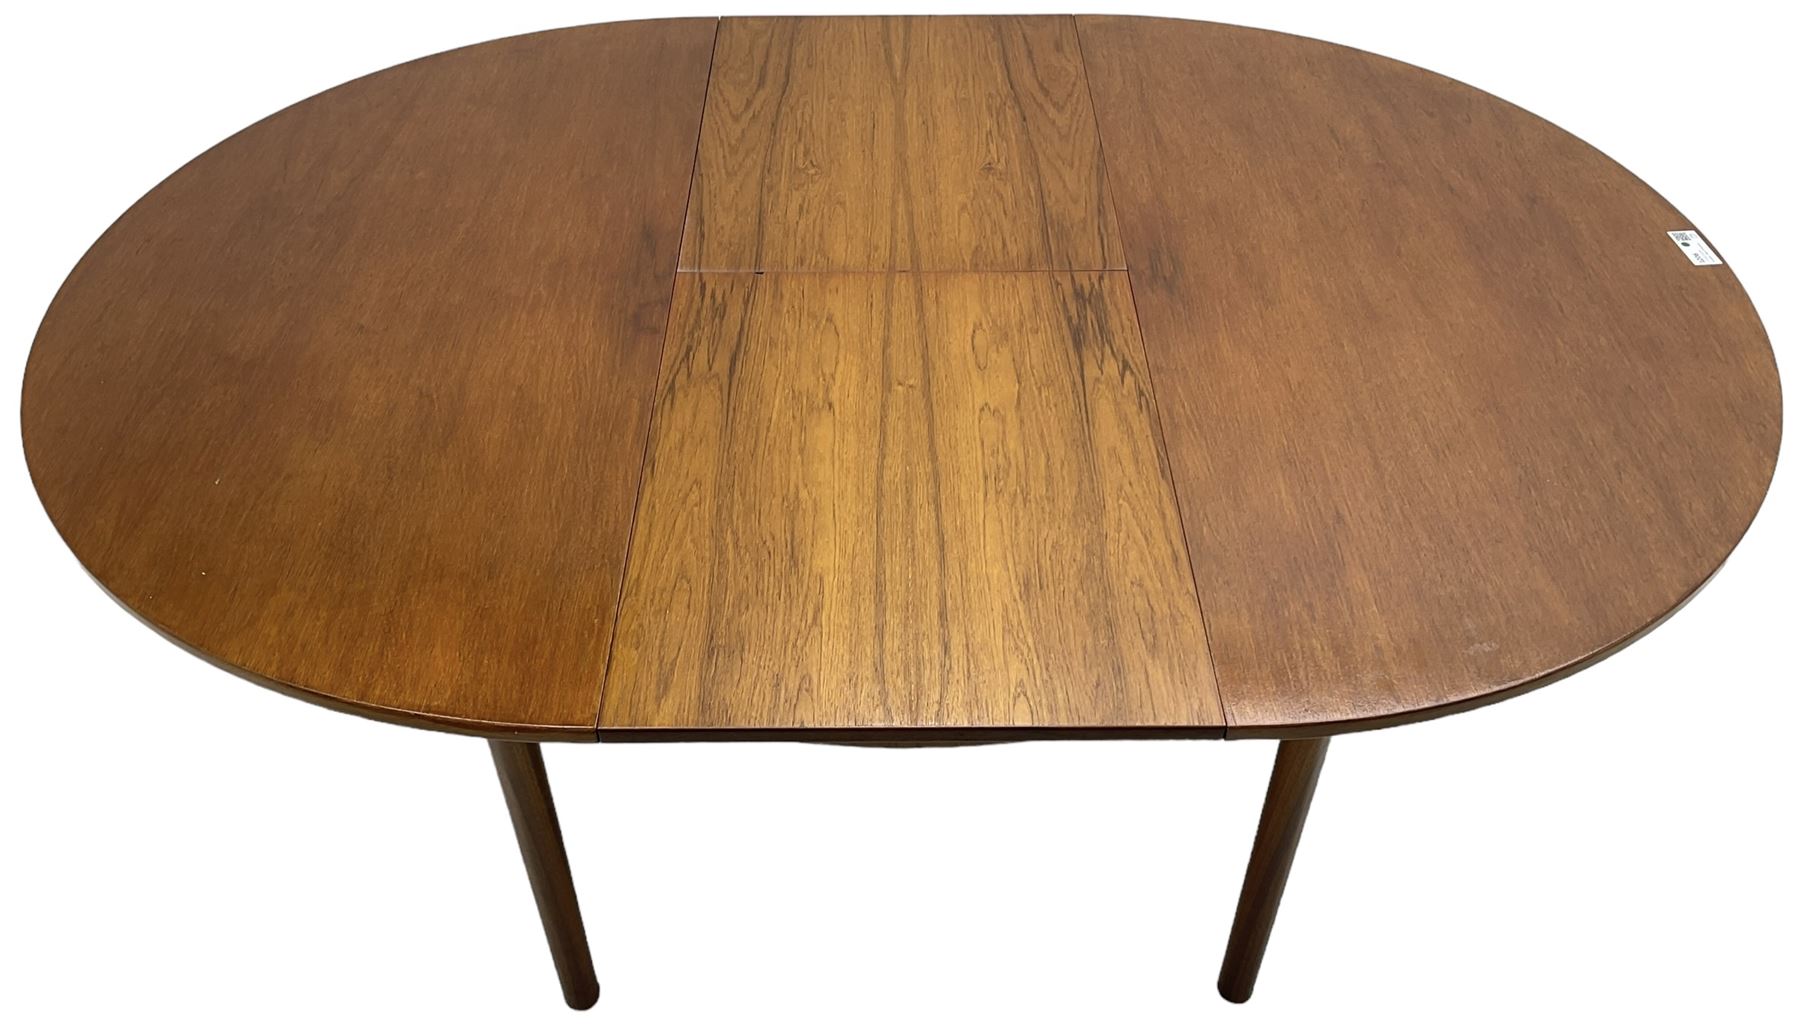 McIntosh - mid-20th century teak extending dining table - Image 2 of 7